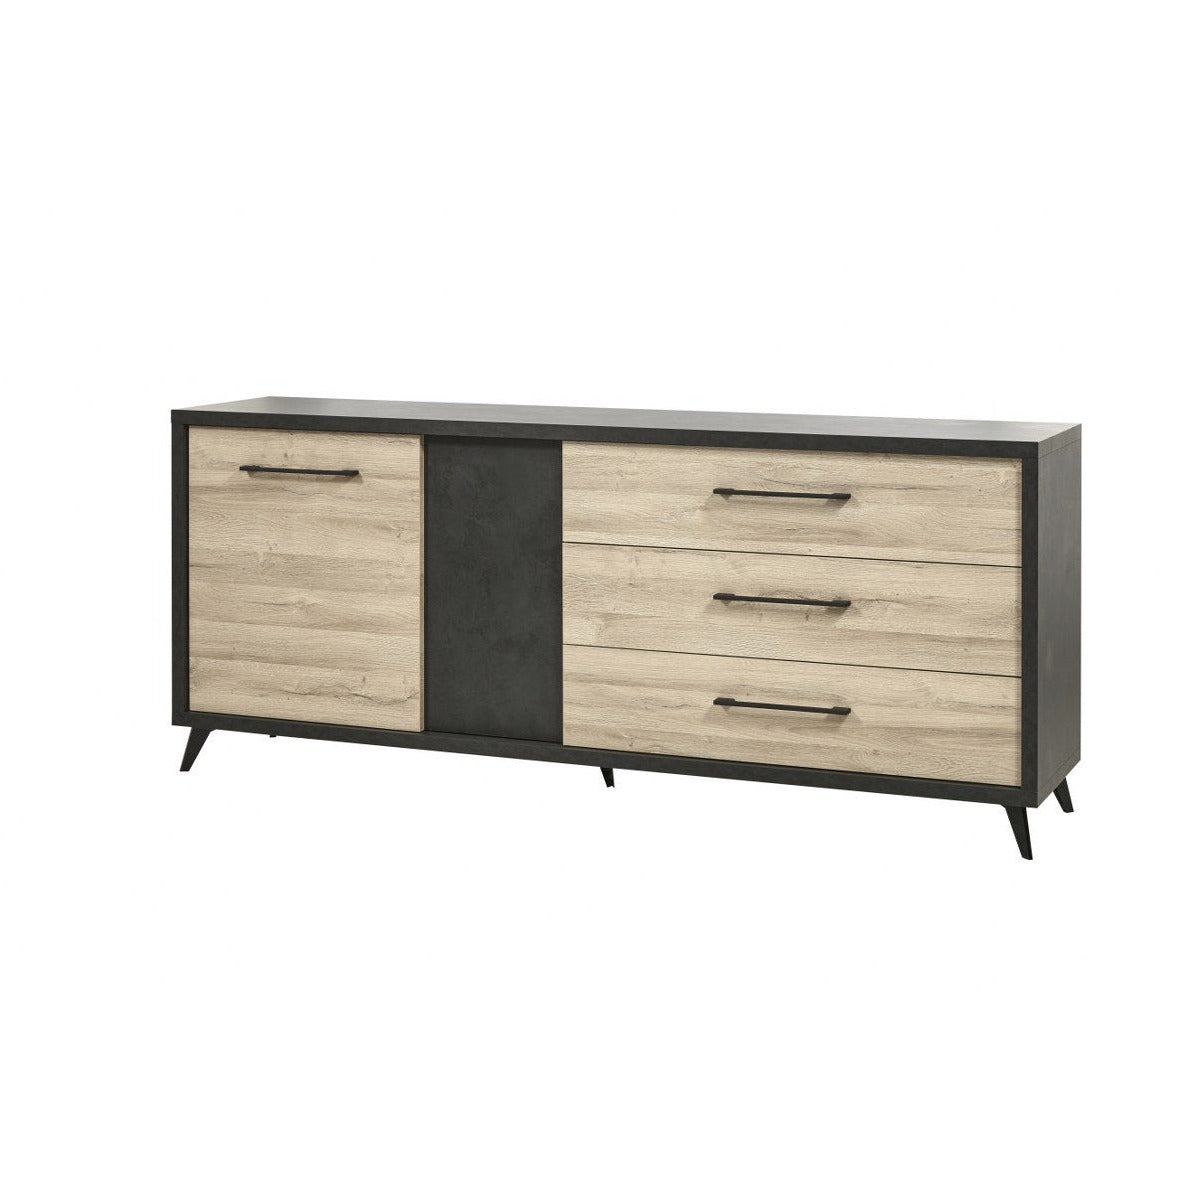 Dresser | Furniture series Moulin | Natural, black | 220x50x